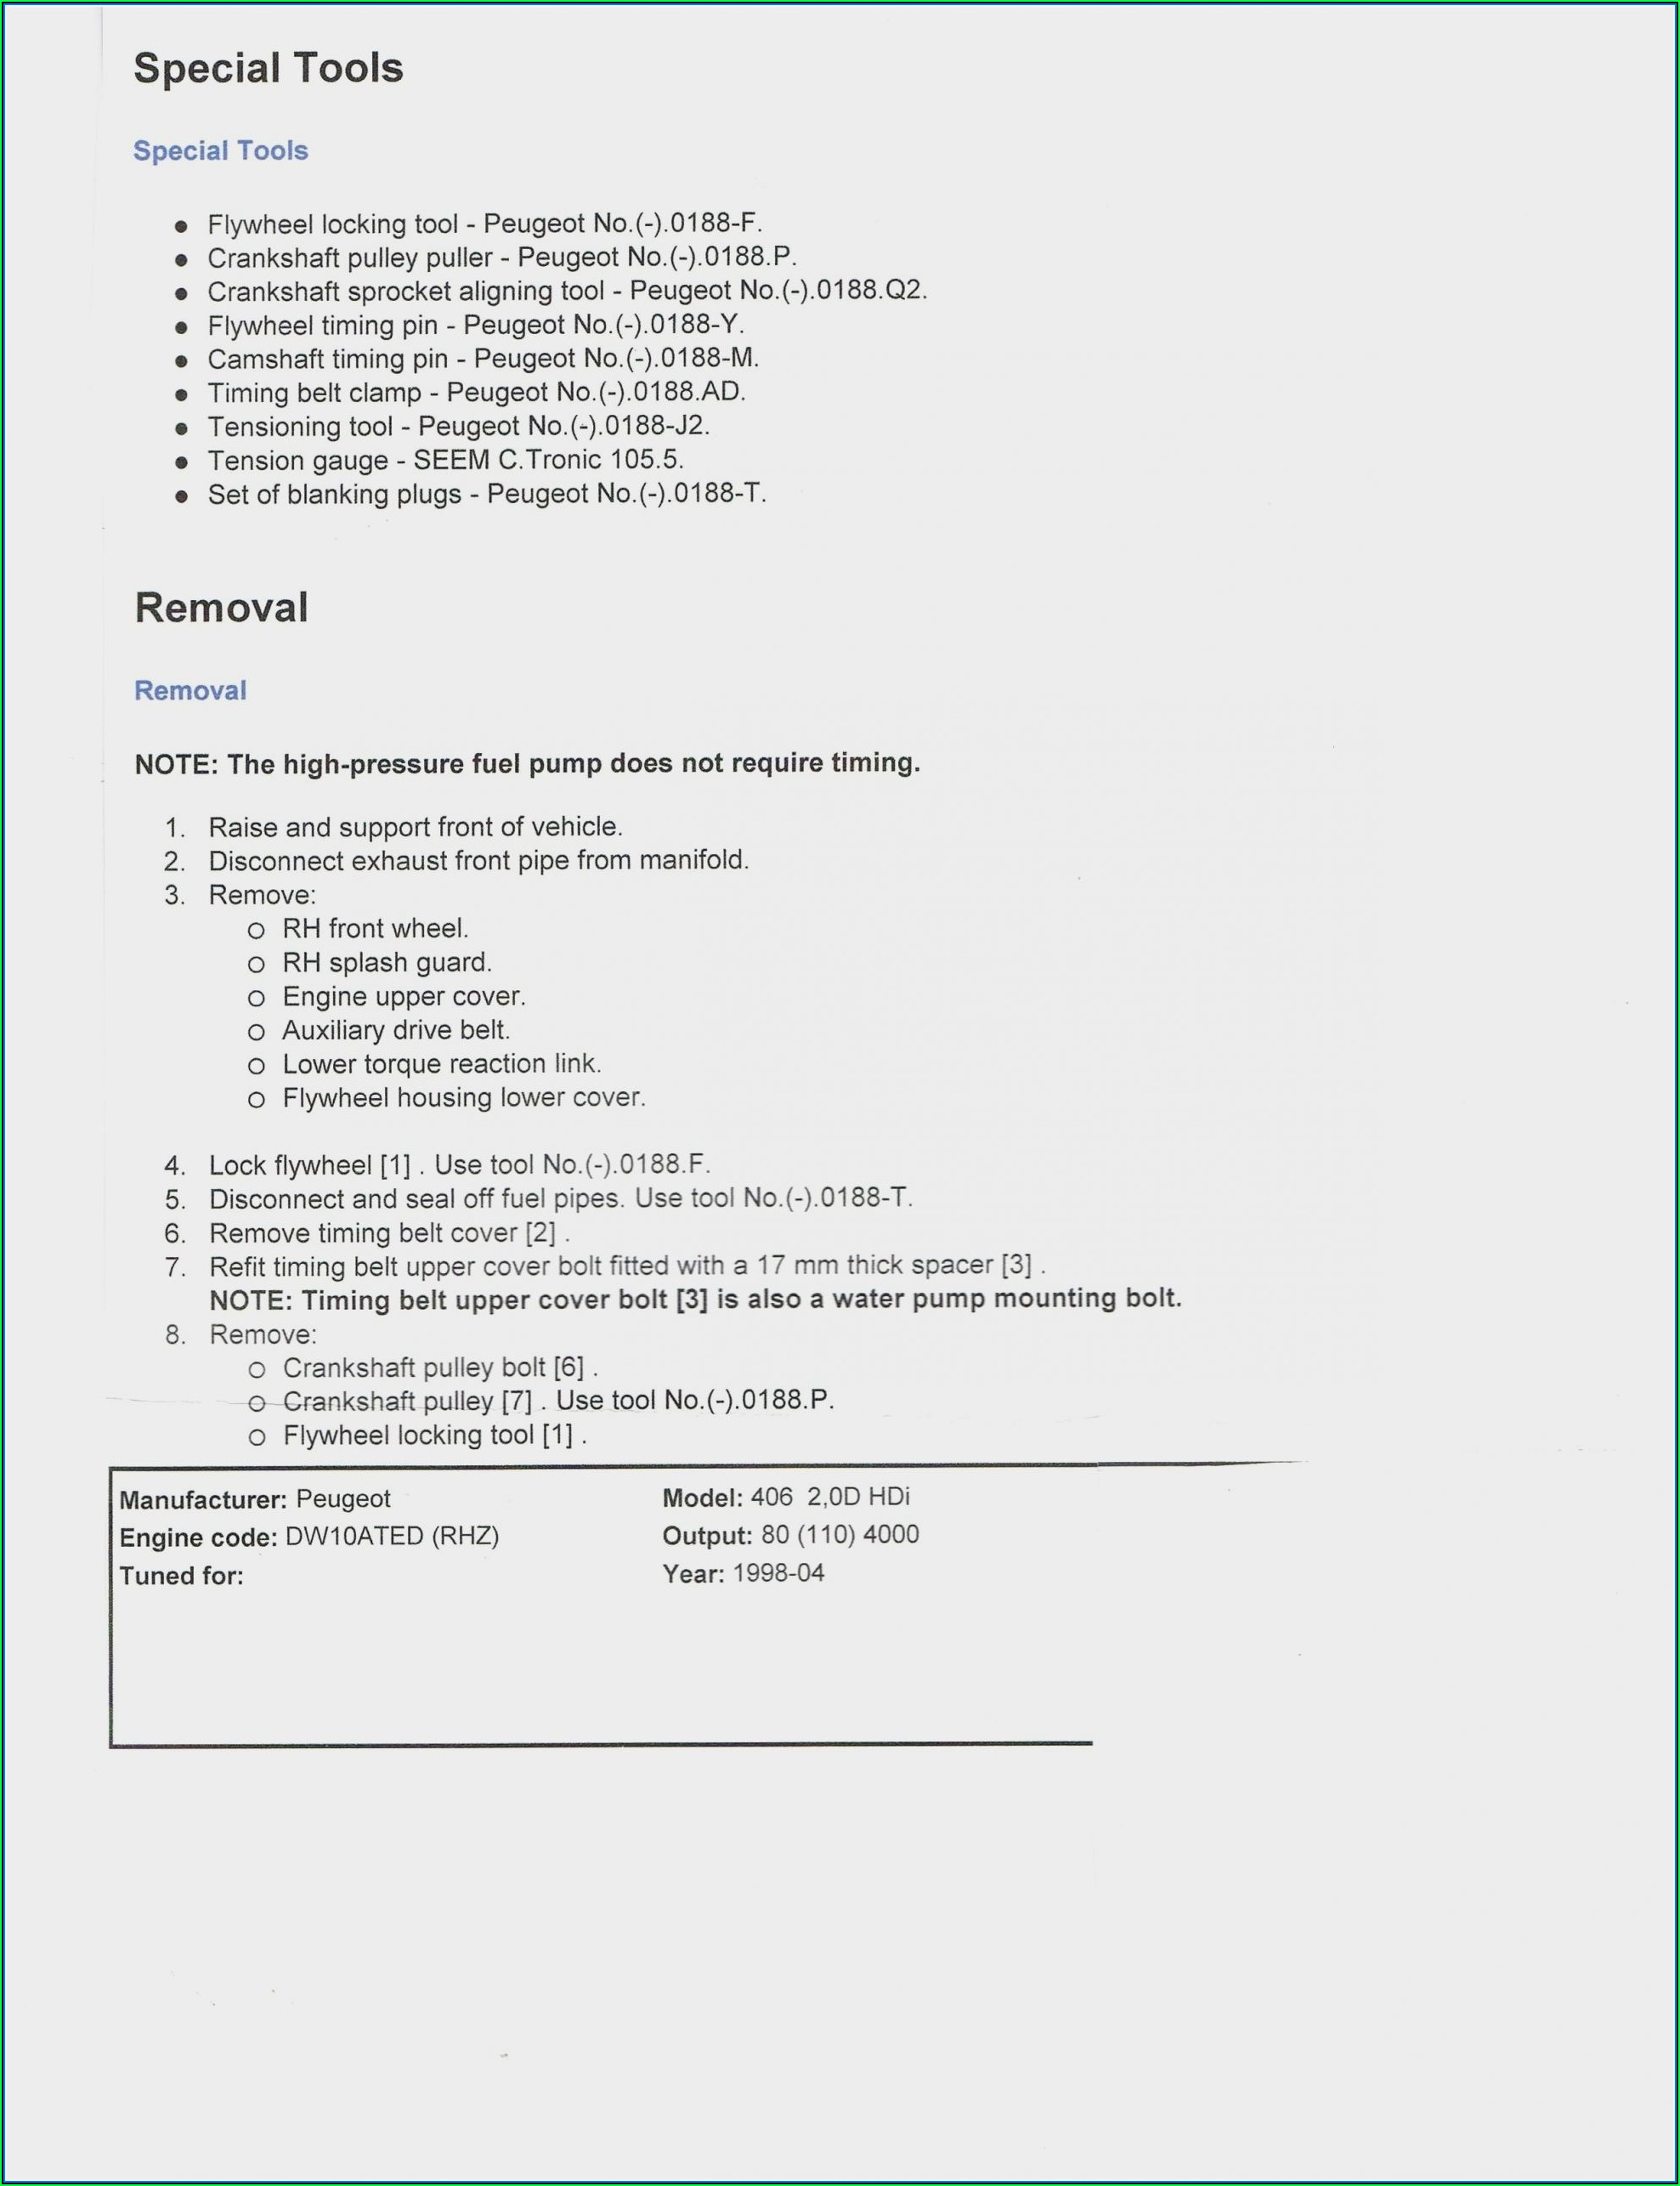 Blank Resume Format Pdf For Freshers